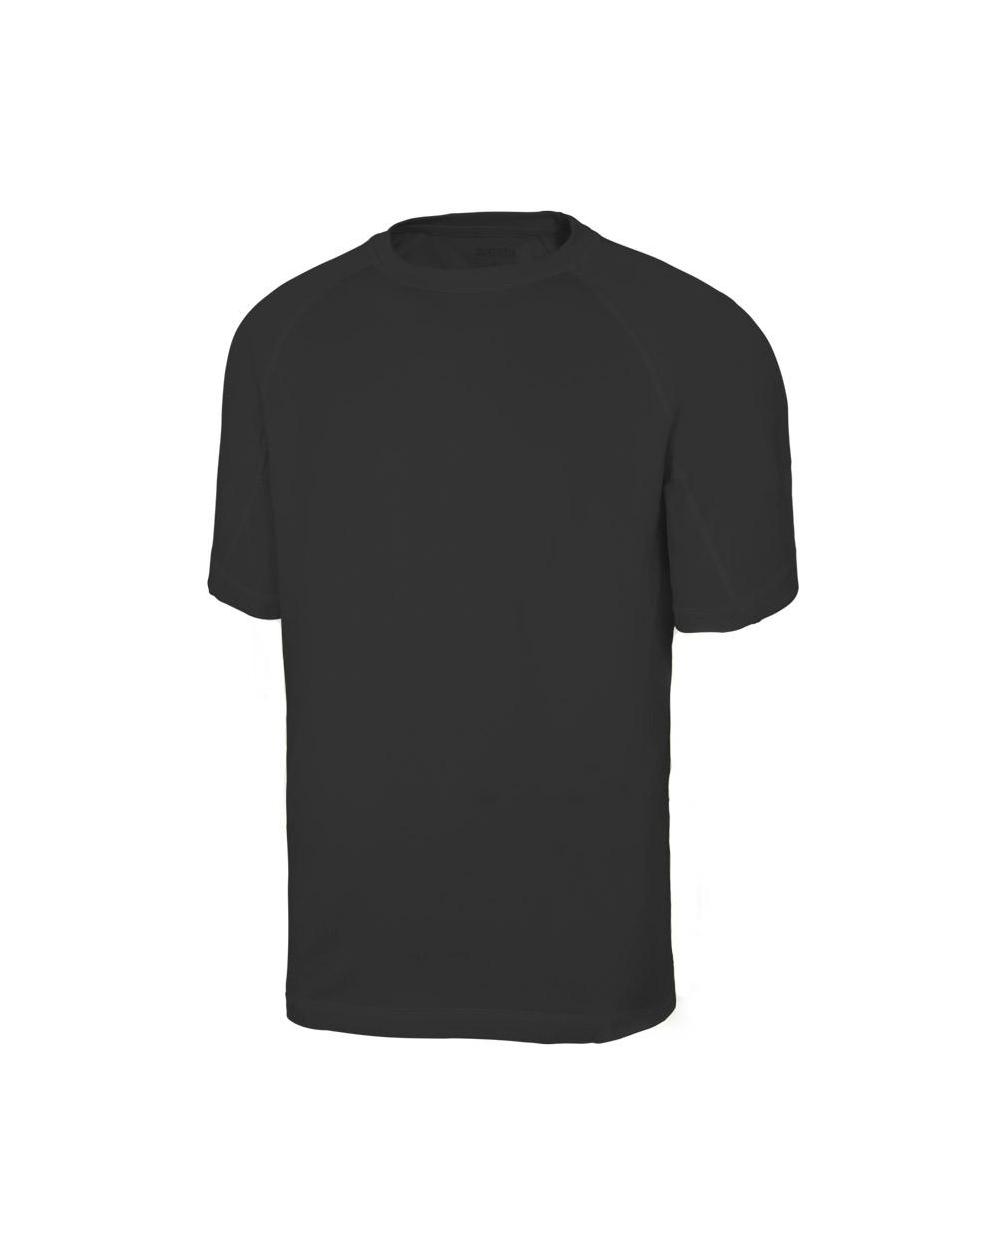 Comprar Camiseta tecnica transpirable serie 105506 online barato Negro